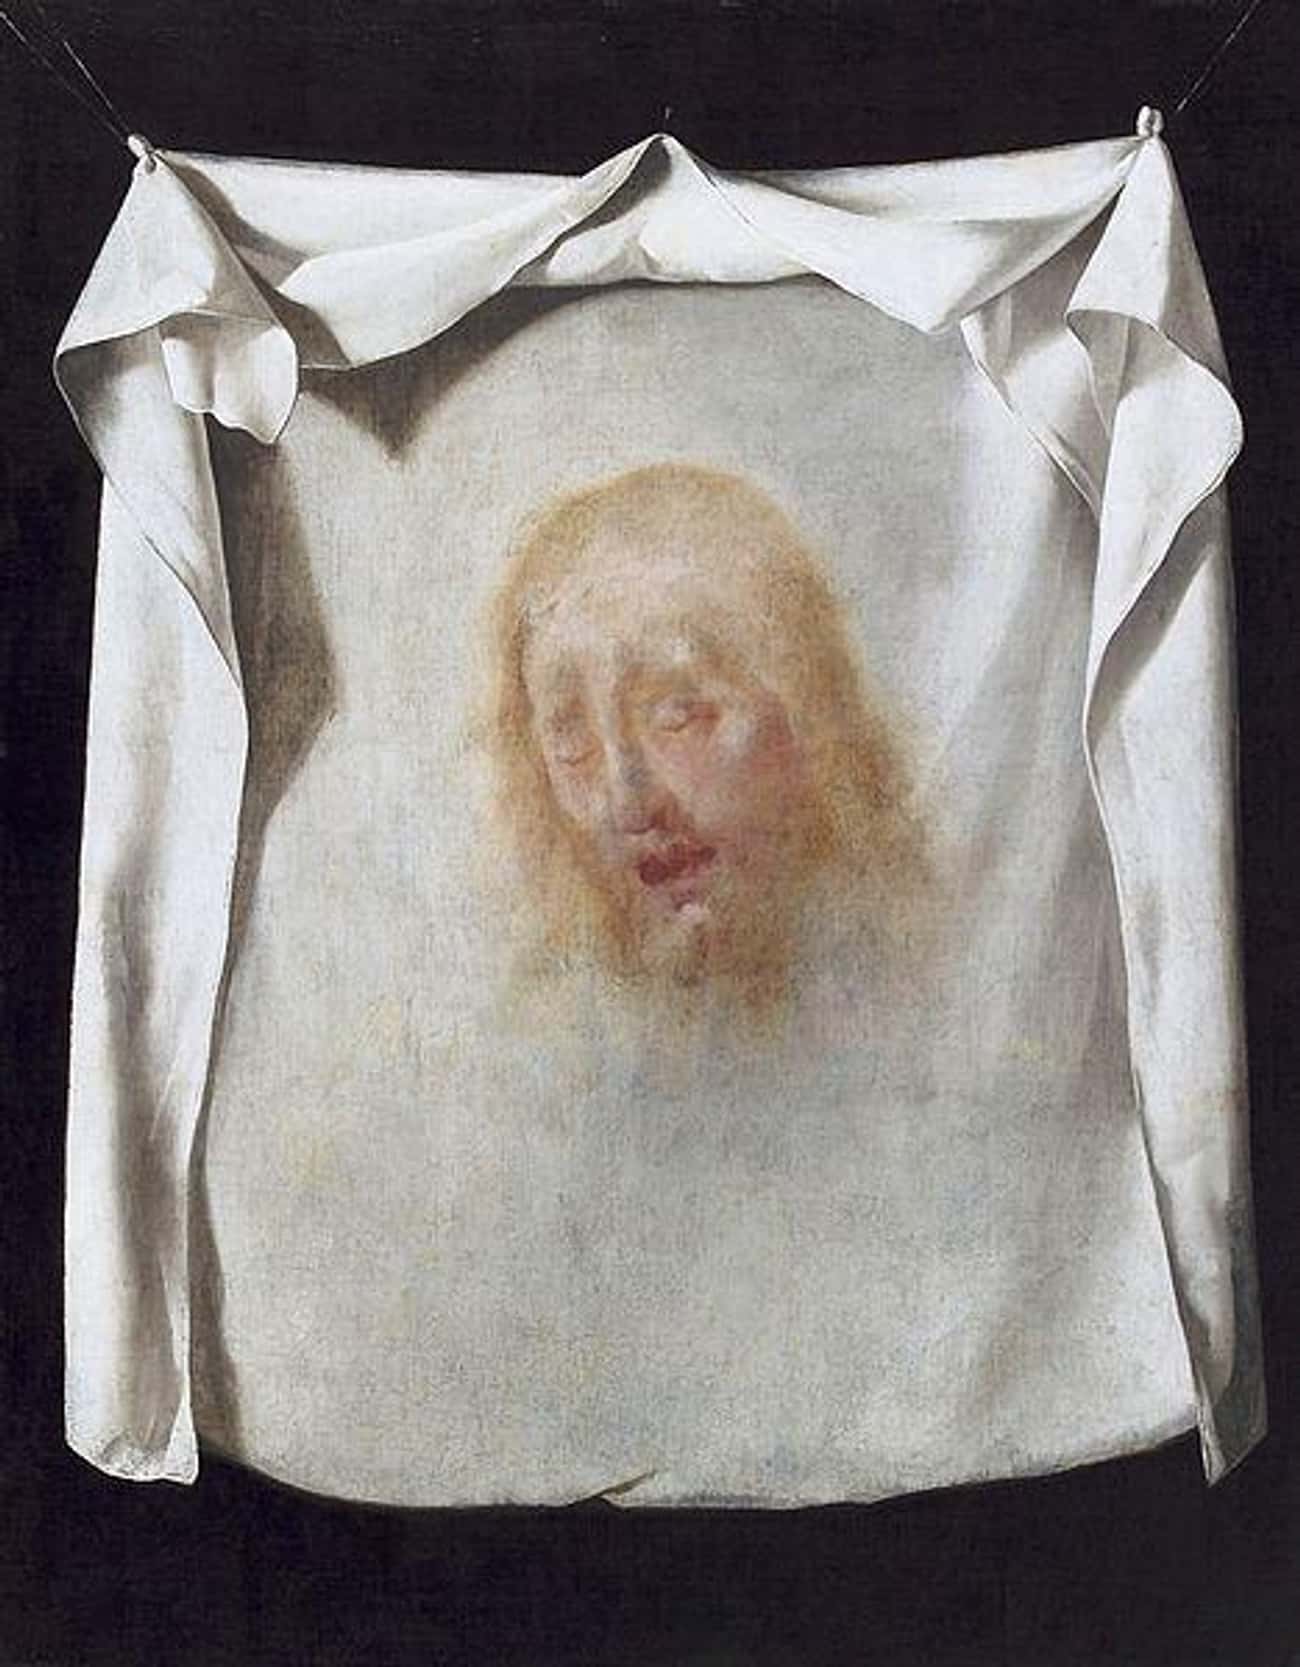 The Veil Shows The Same Face As The Shroud Of Turin